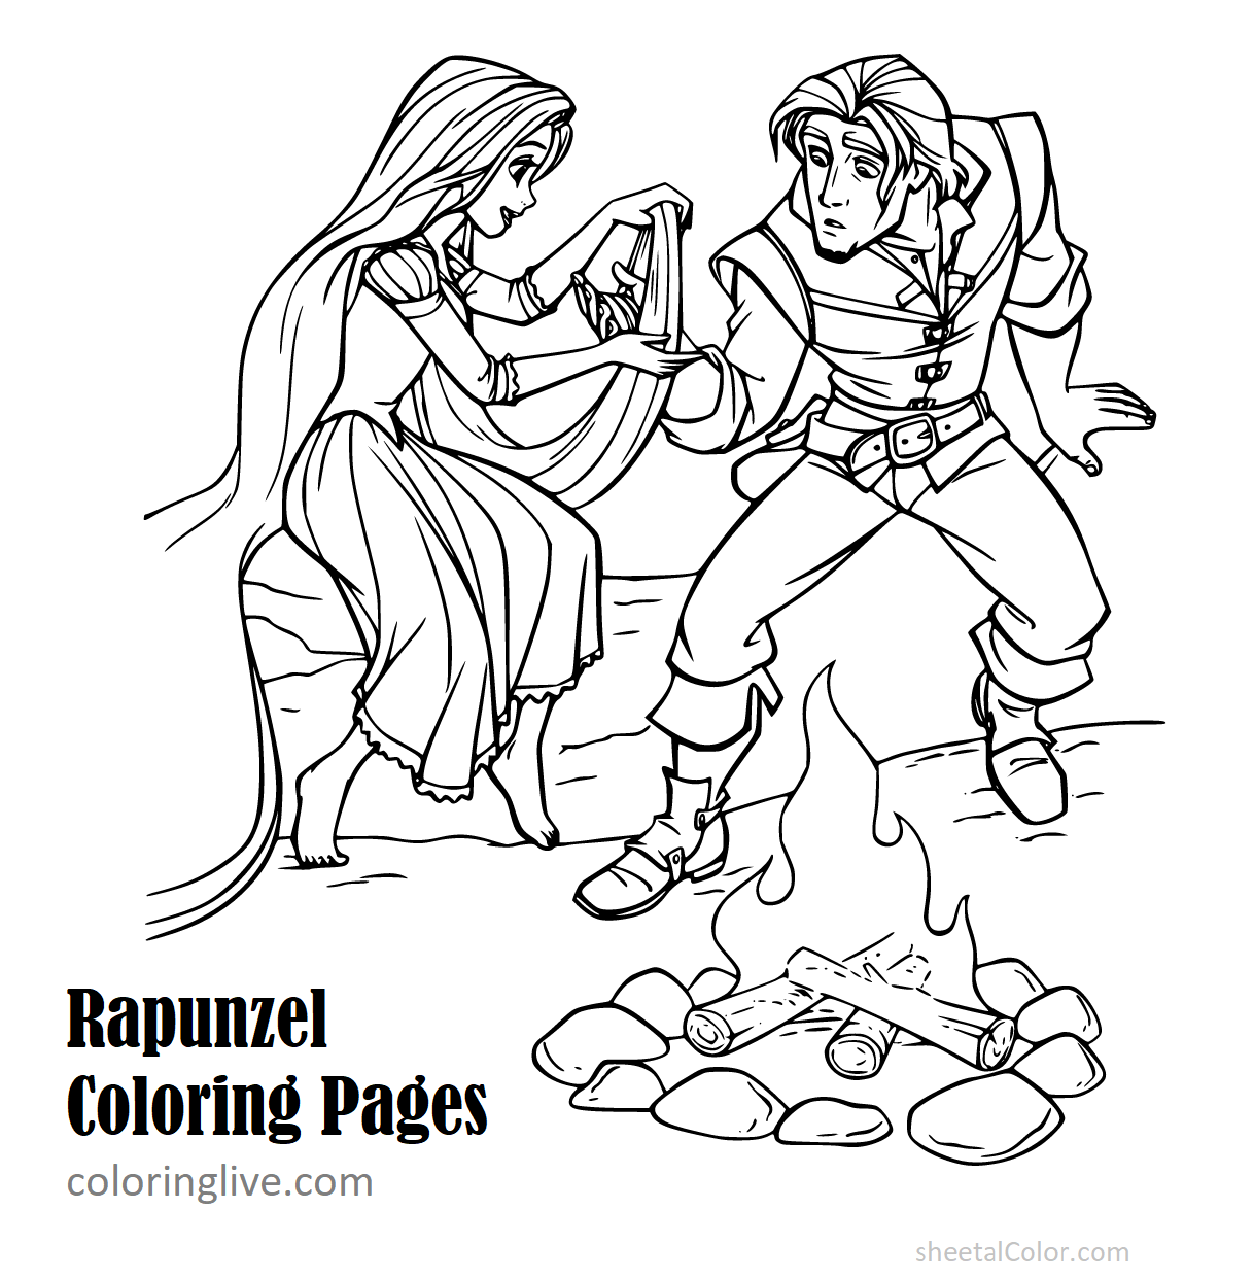 Rapunzel and Flynn Coloring Page - SheetalColor.com